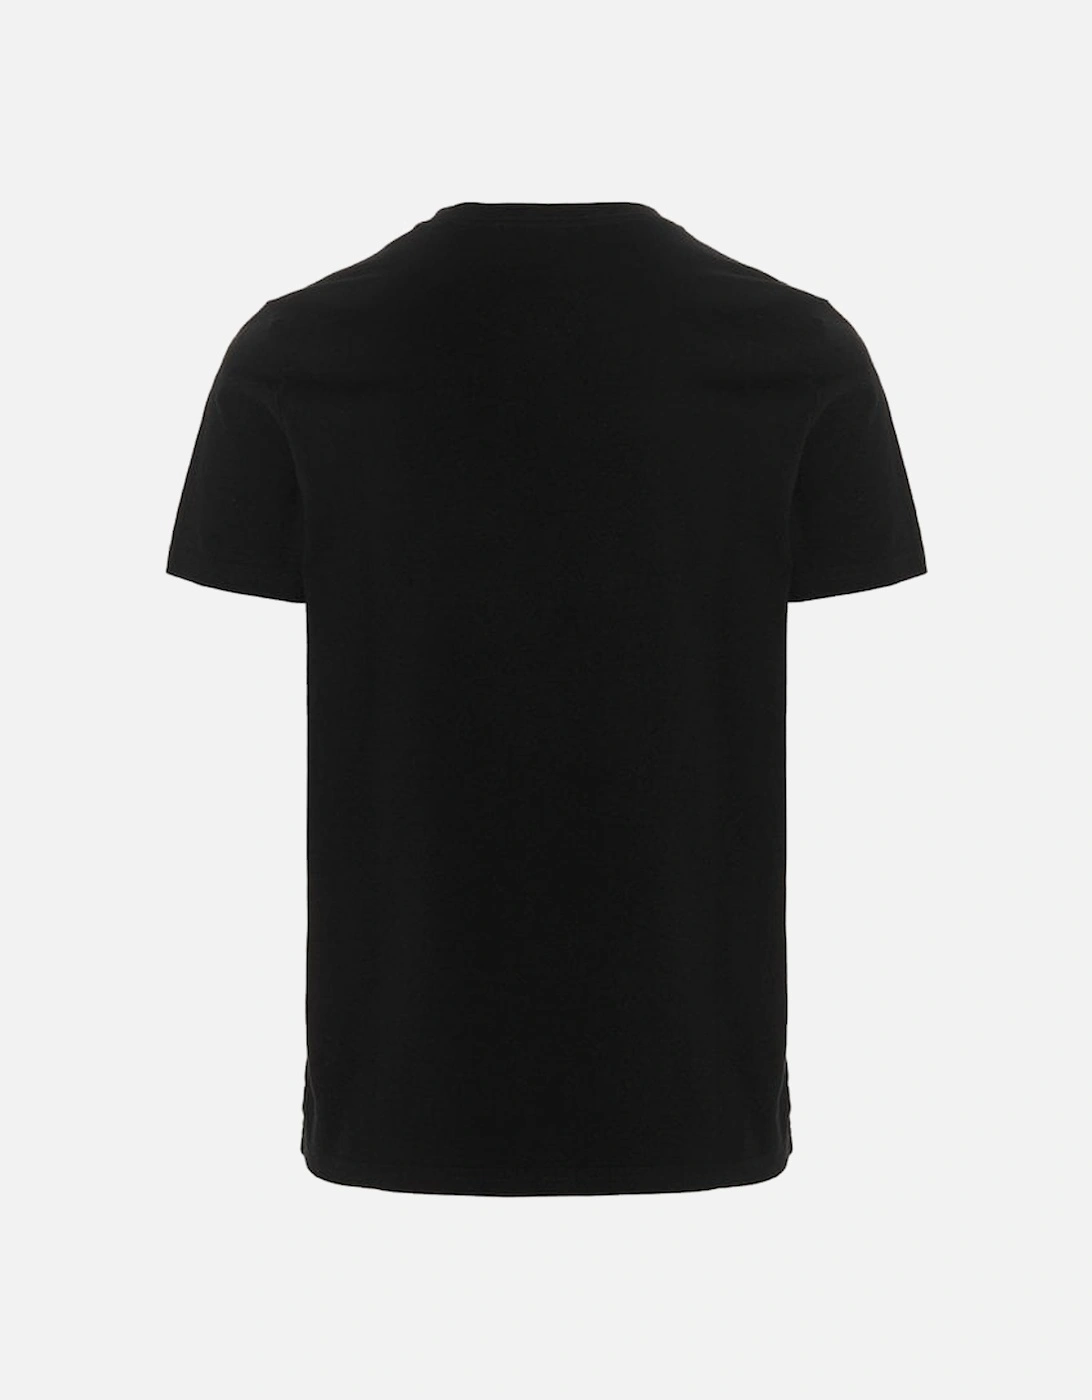 Satellite Basic Logo Cotton Black T-Shirt